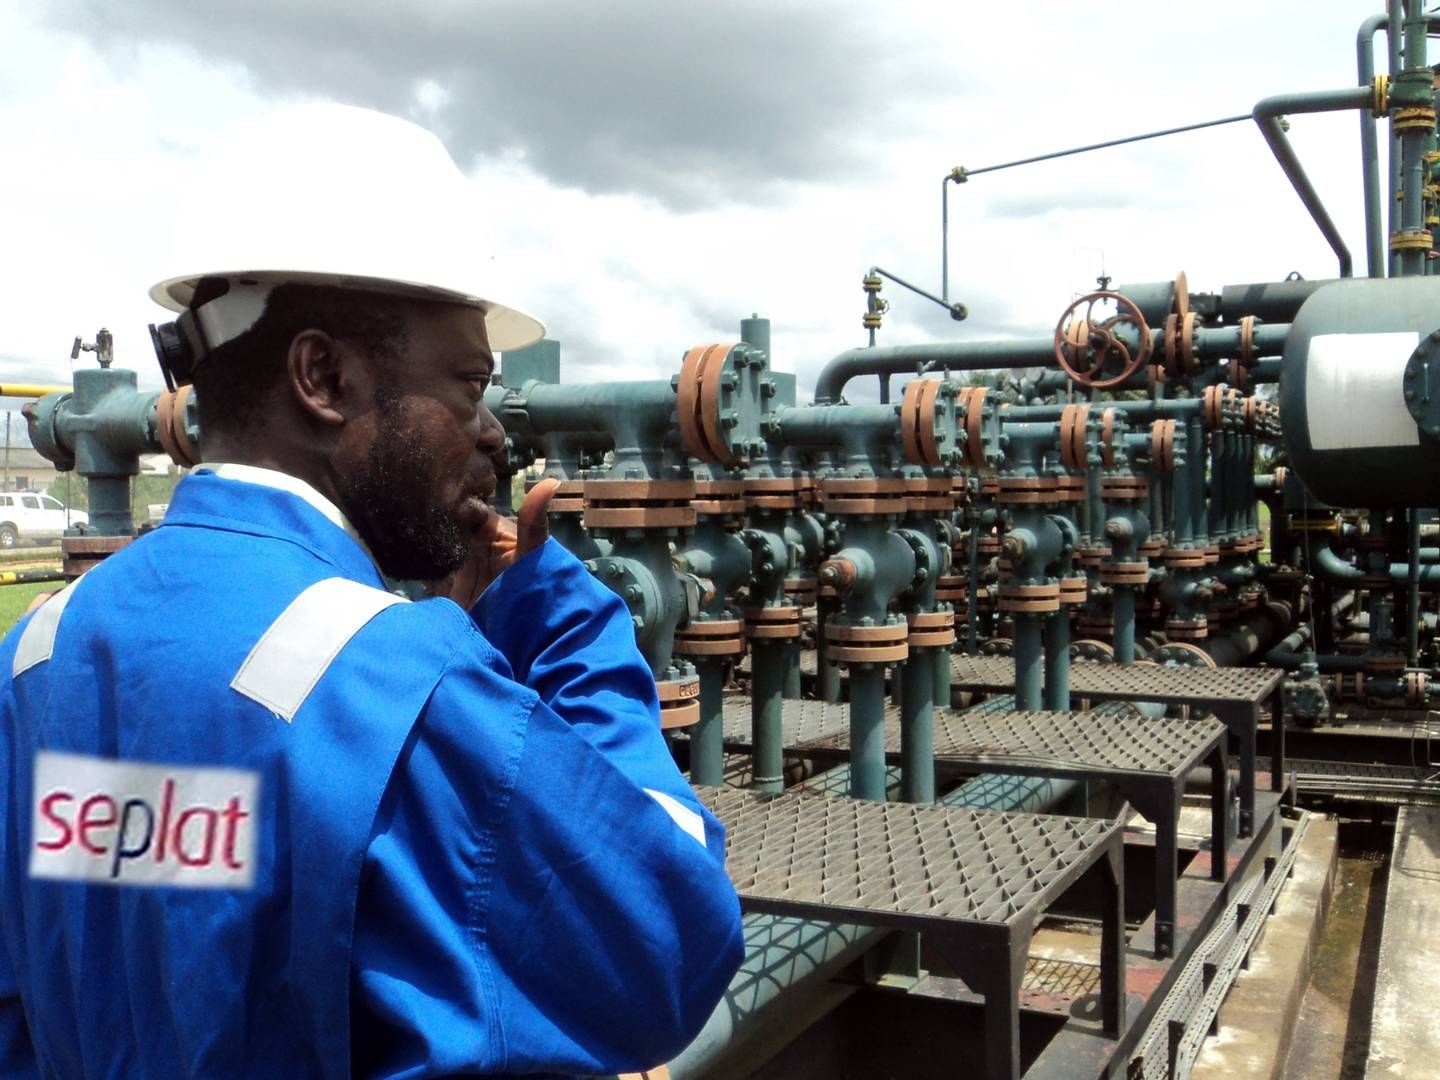 Olieproduktion i Nigeria | Foto: Seplant